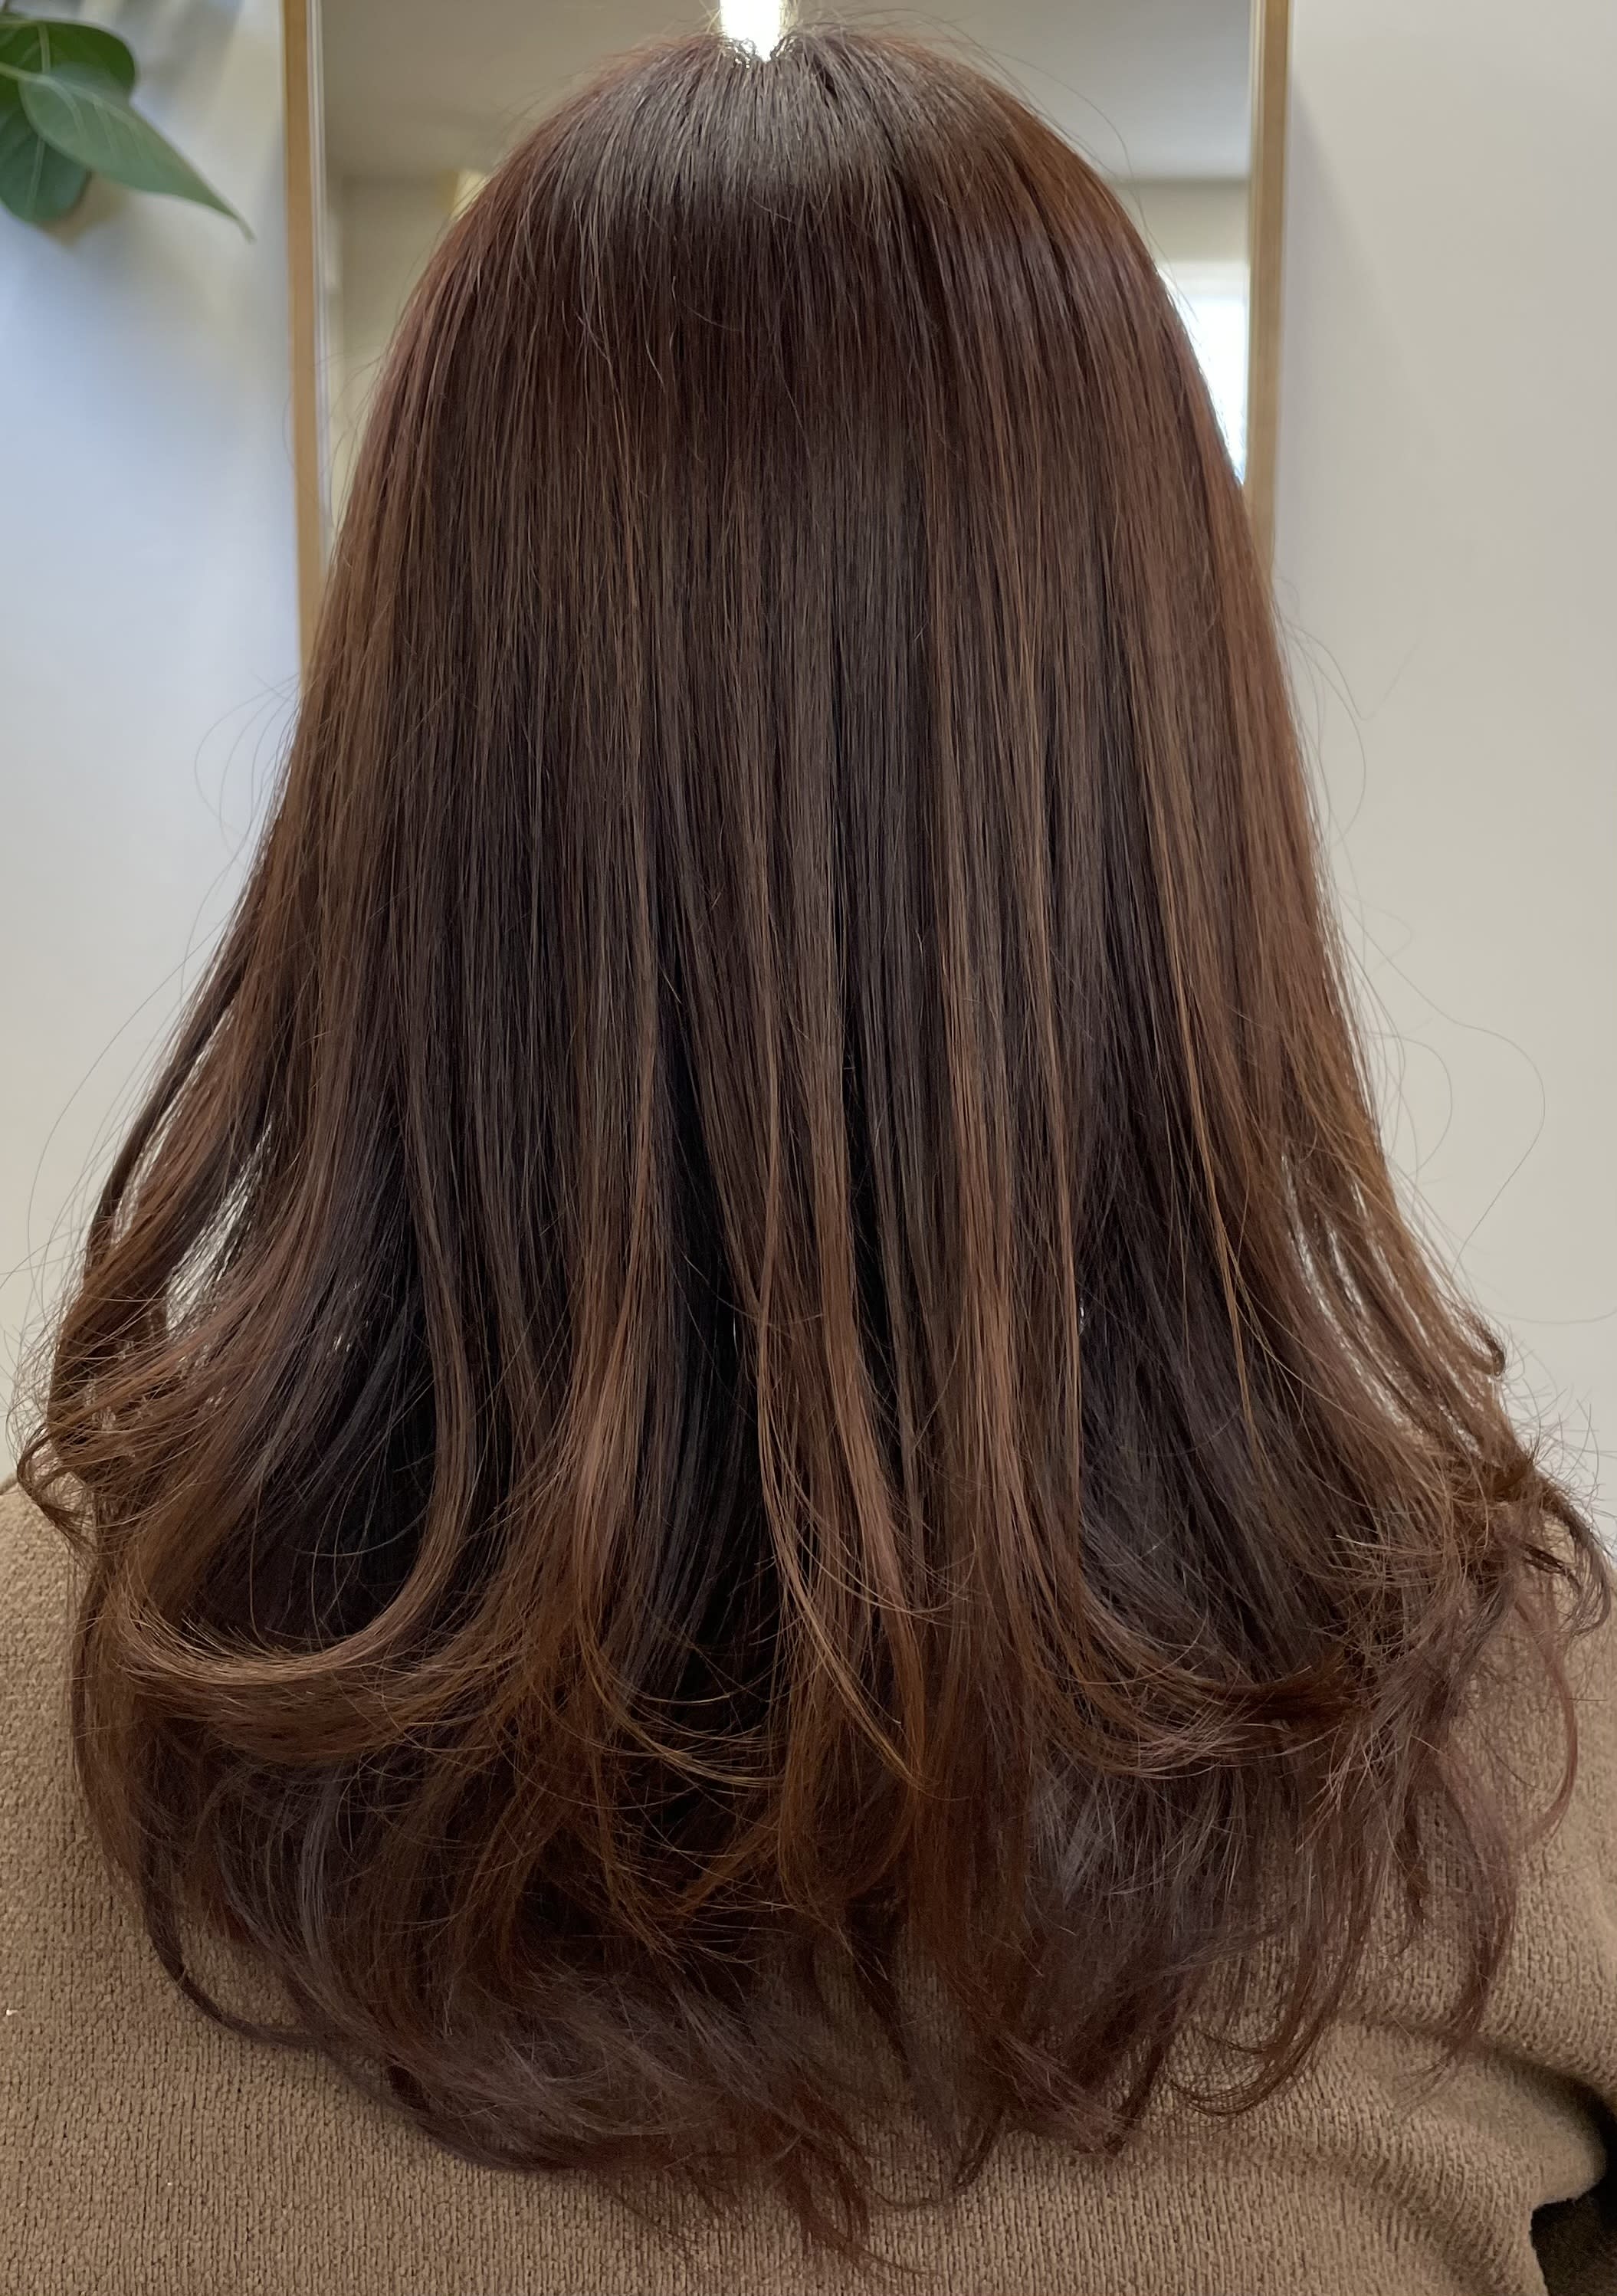 HAIR WORK STUDIO noize【ヘアー ワーク スタジオ ノイズ】のスタイル紹介。#暖色カラー #髪質改善カラー #レイヤーカット #秋カラー